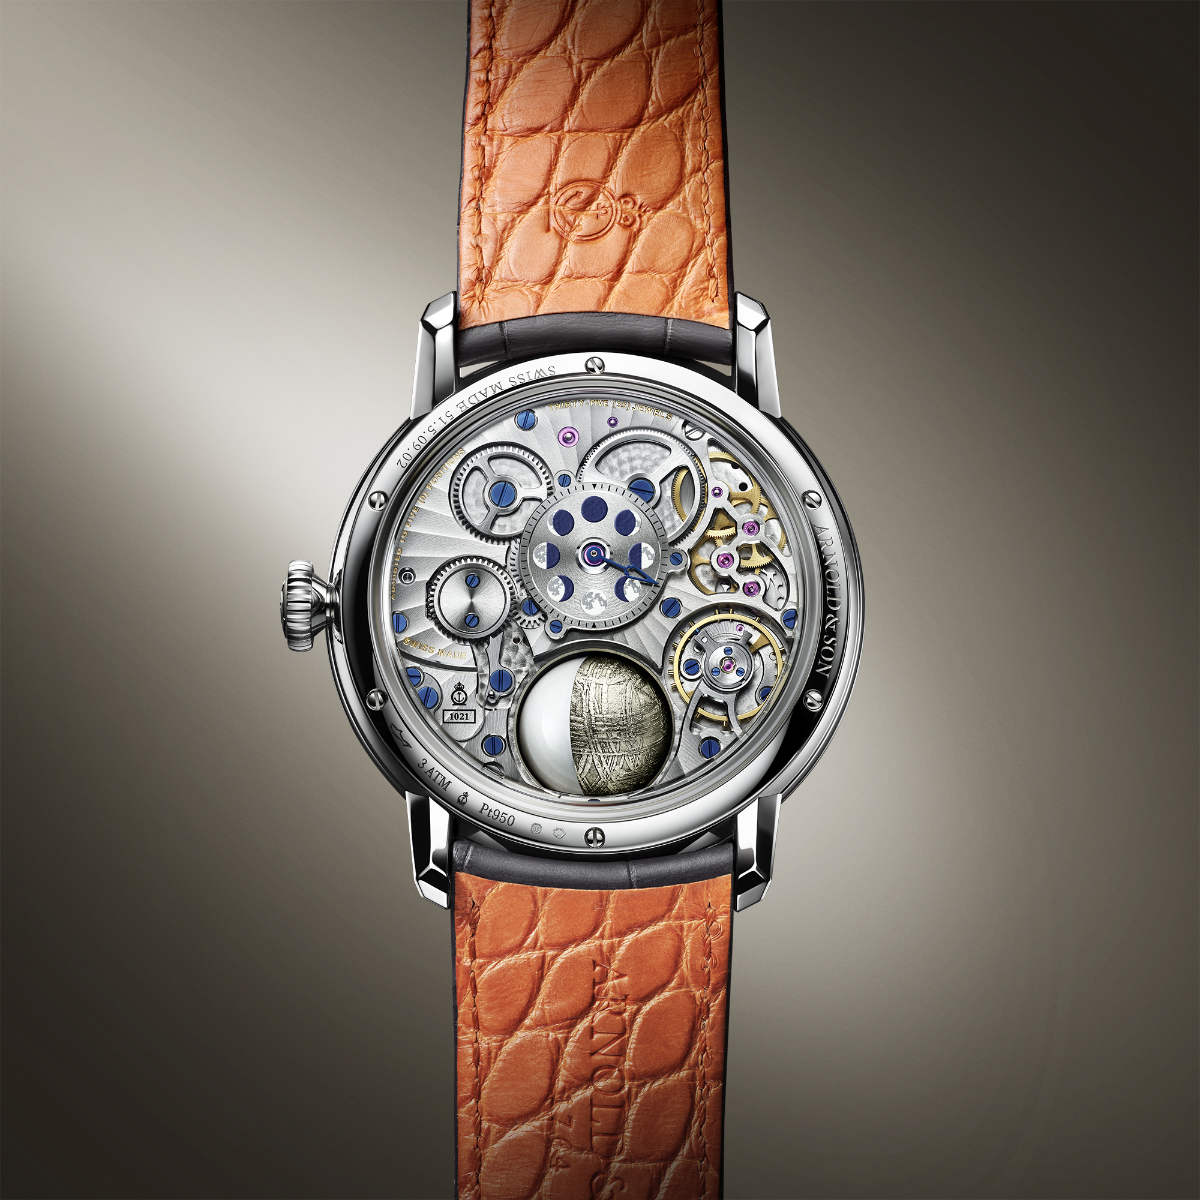 Arnold & Son Presents Its New Luna Magna Platinum Watch - Made Of Stardust